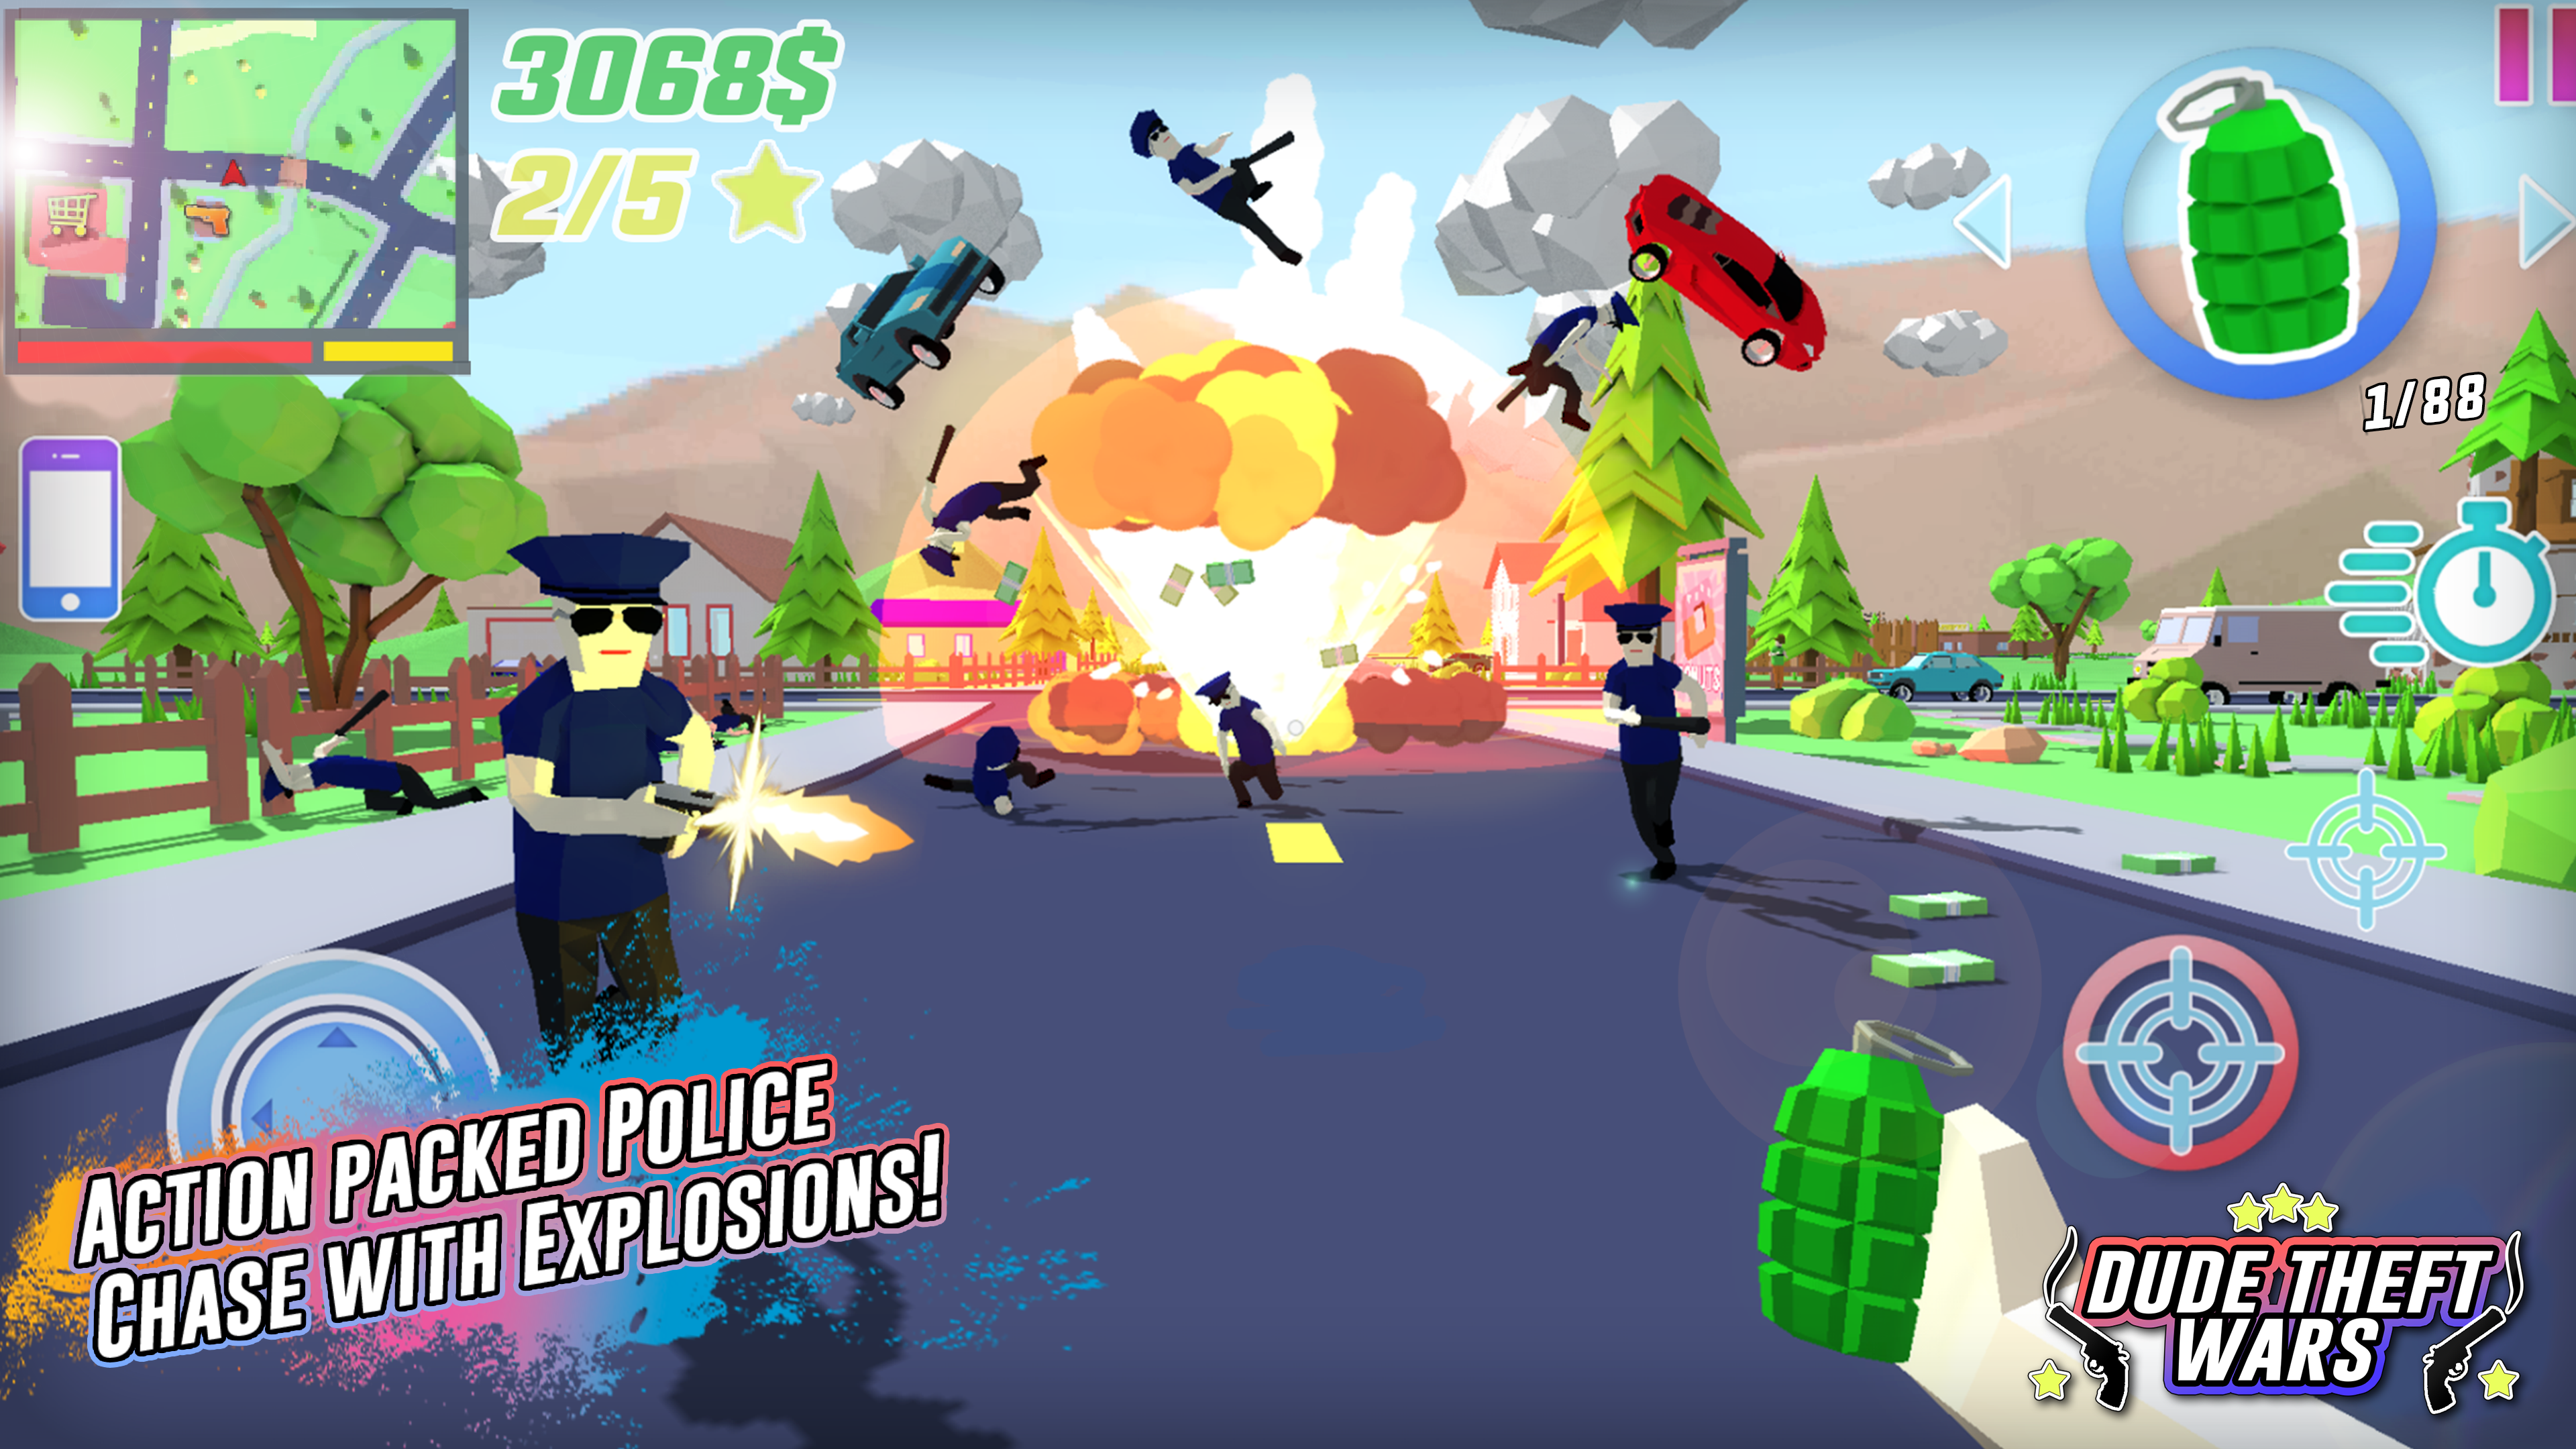 Screenshot of Dude Theft Wars Shooting Games